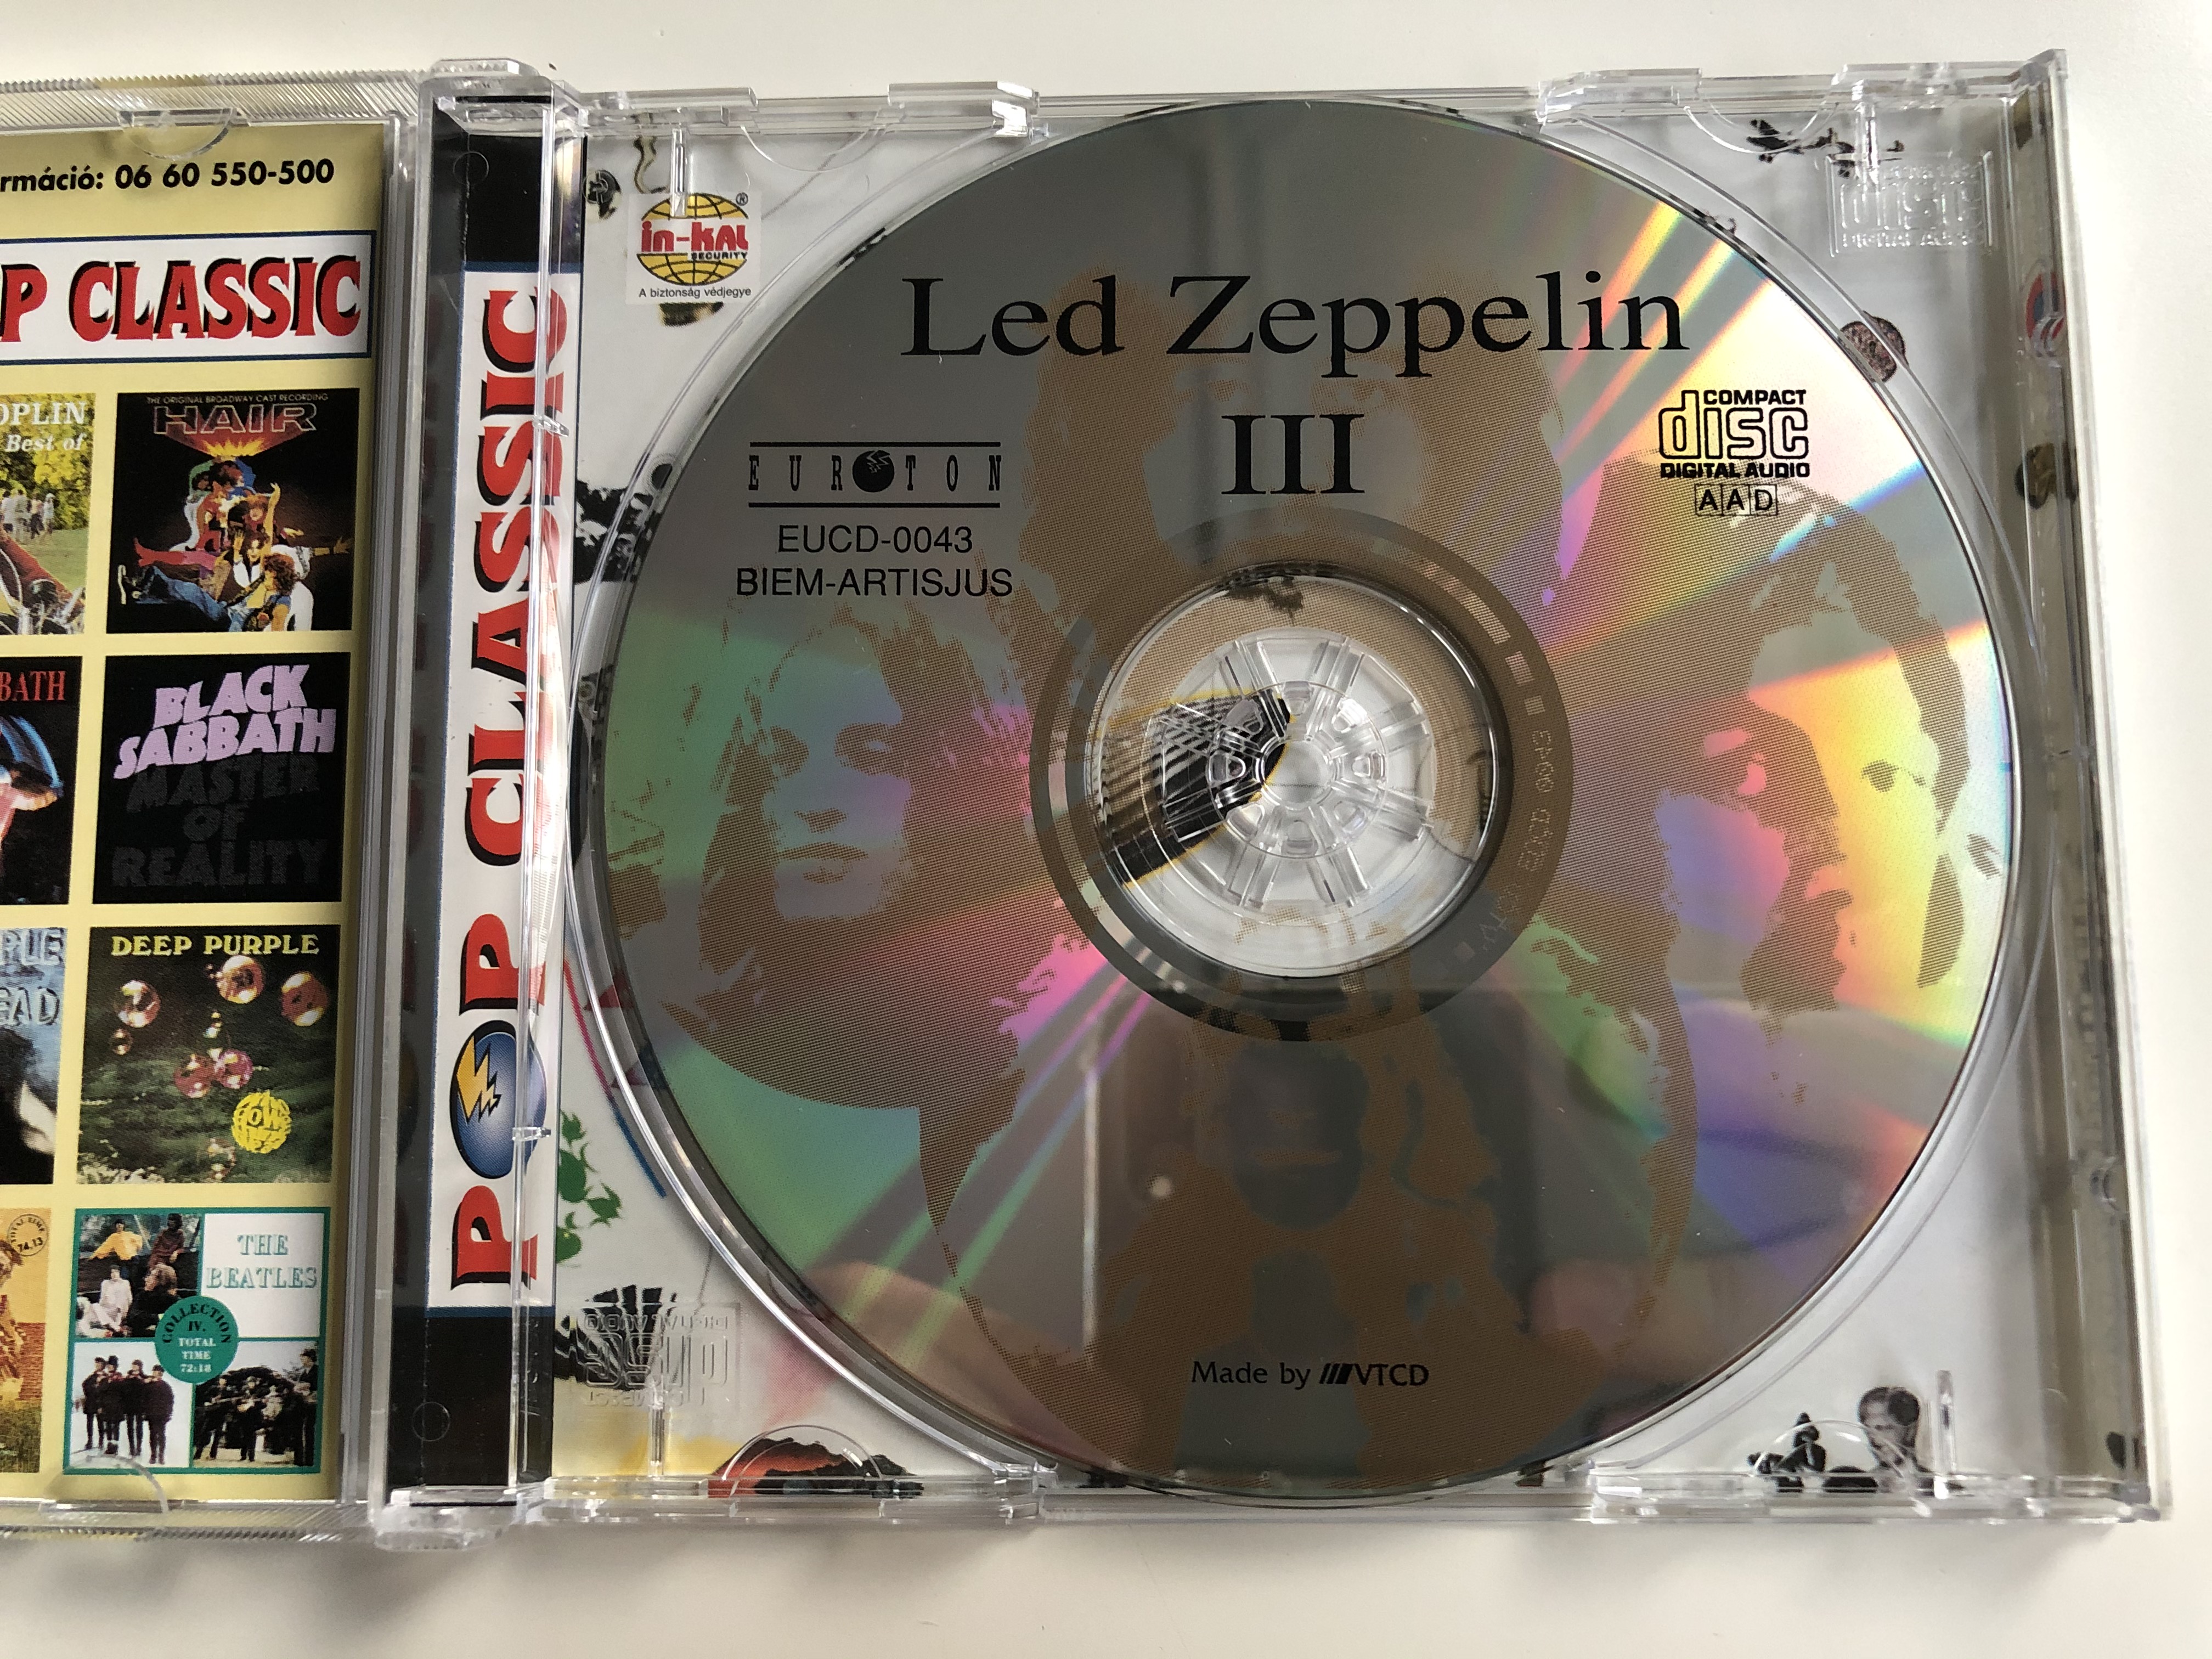 led-zeppelin-iii-pop-classic-euroton-audio-cd-eucd-0043-2-.jpg